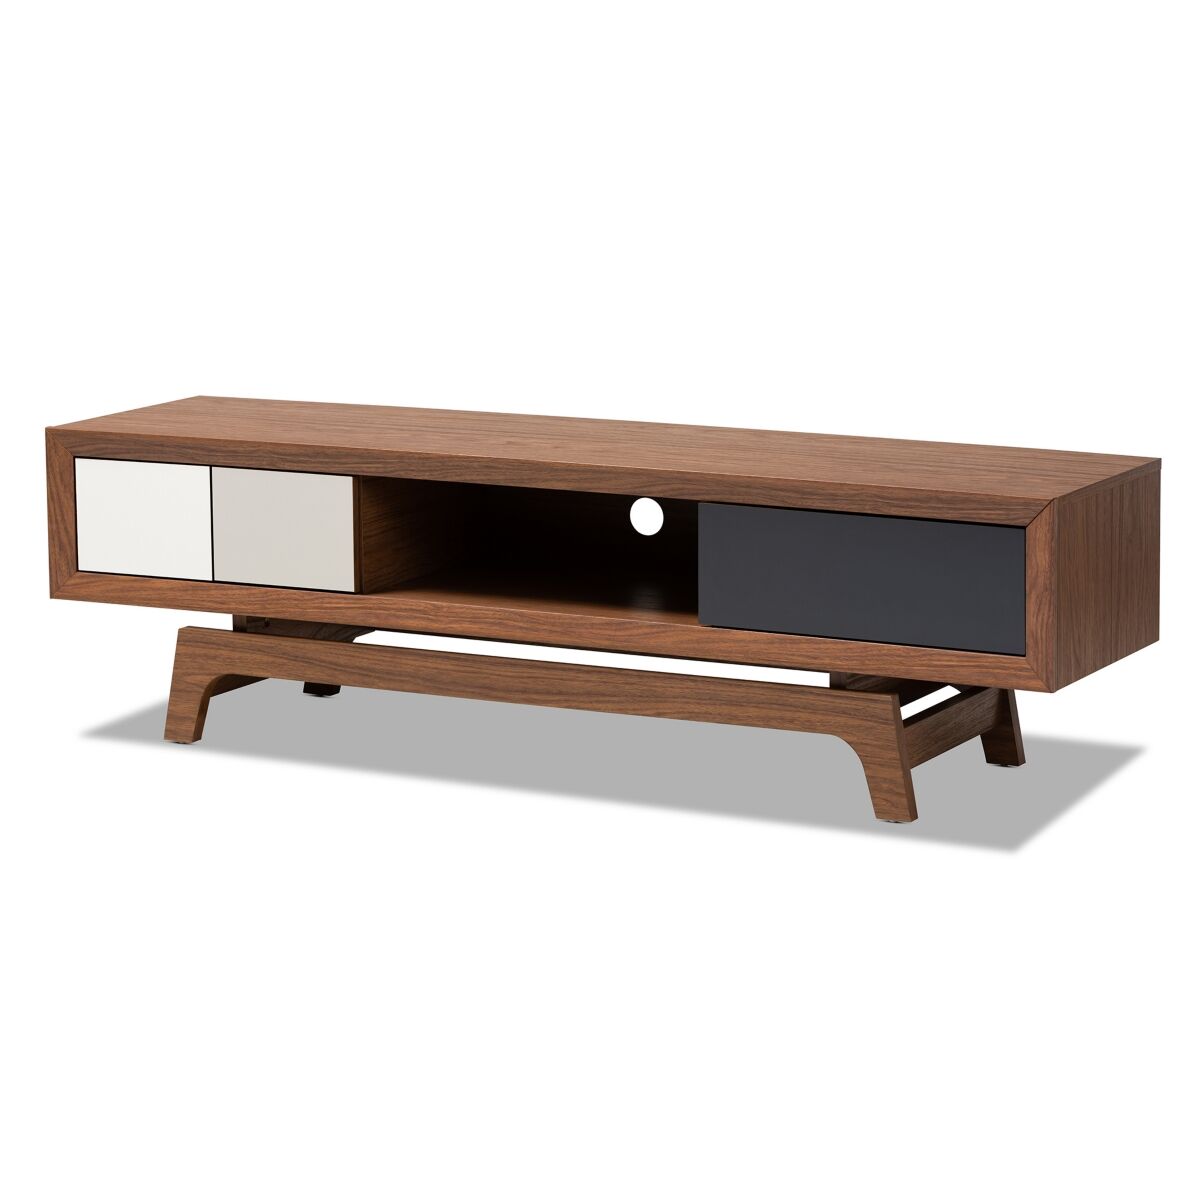 Furniture Svante 3-Drawer Tv Stand - Brown